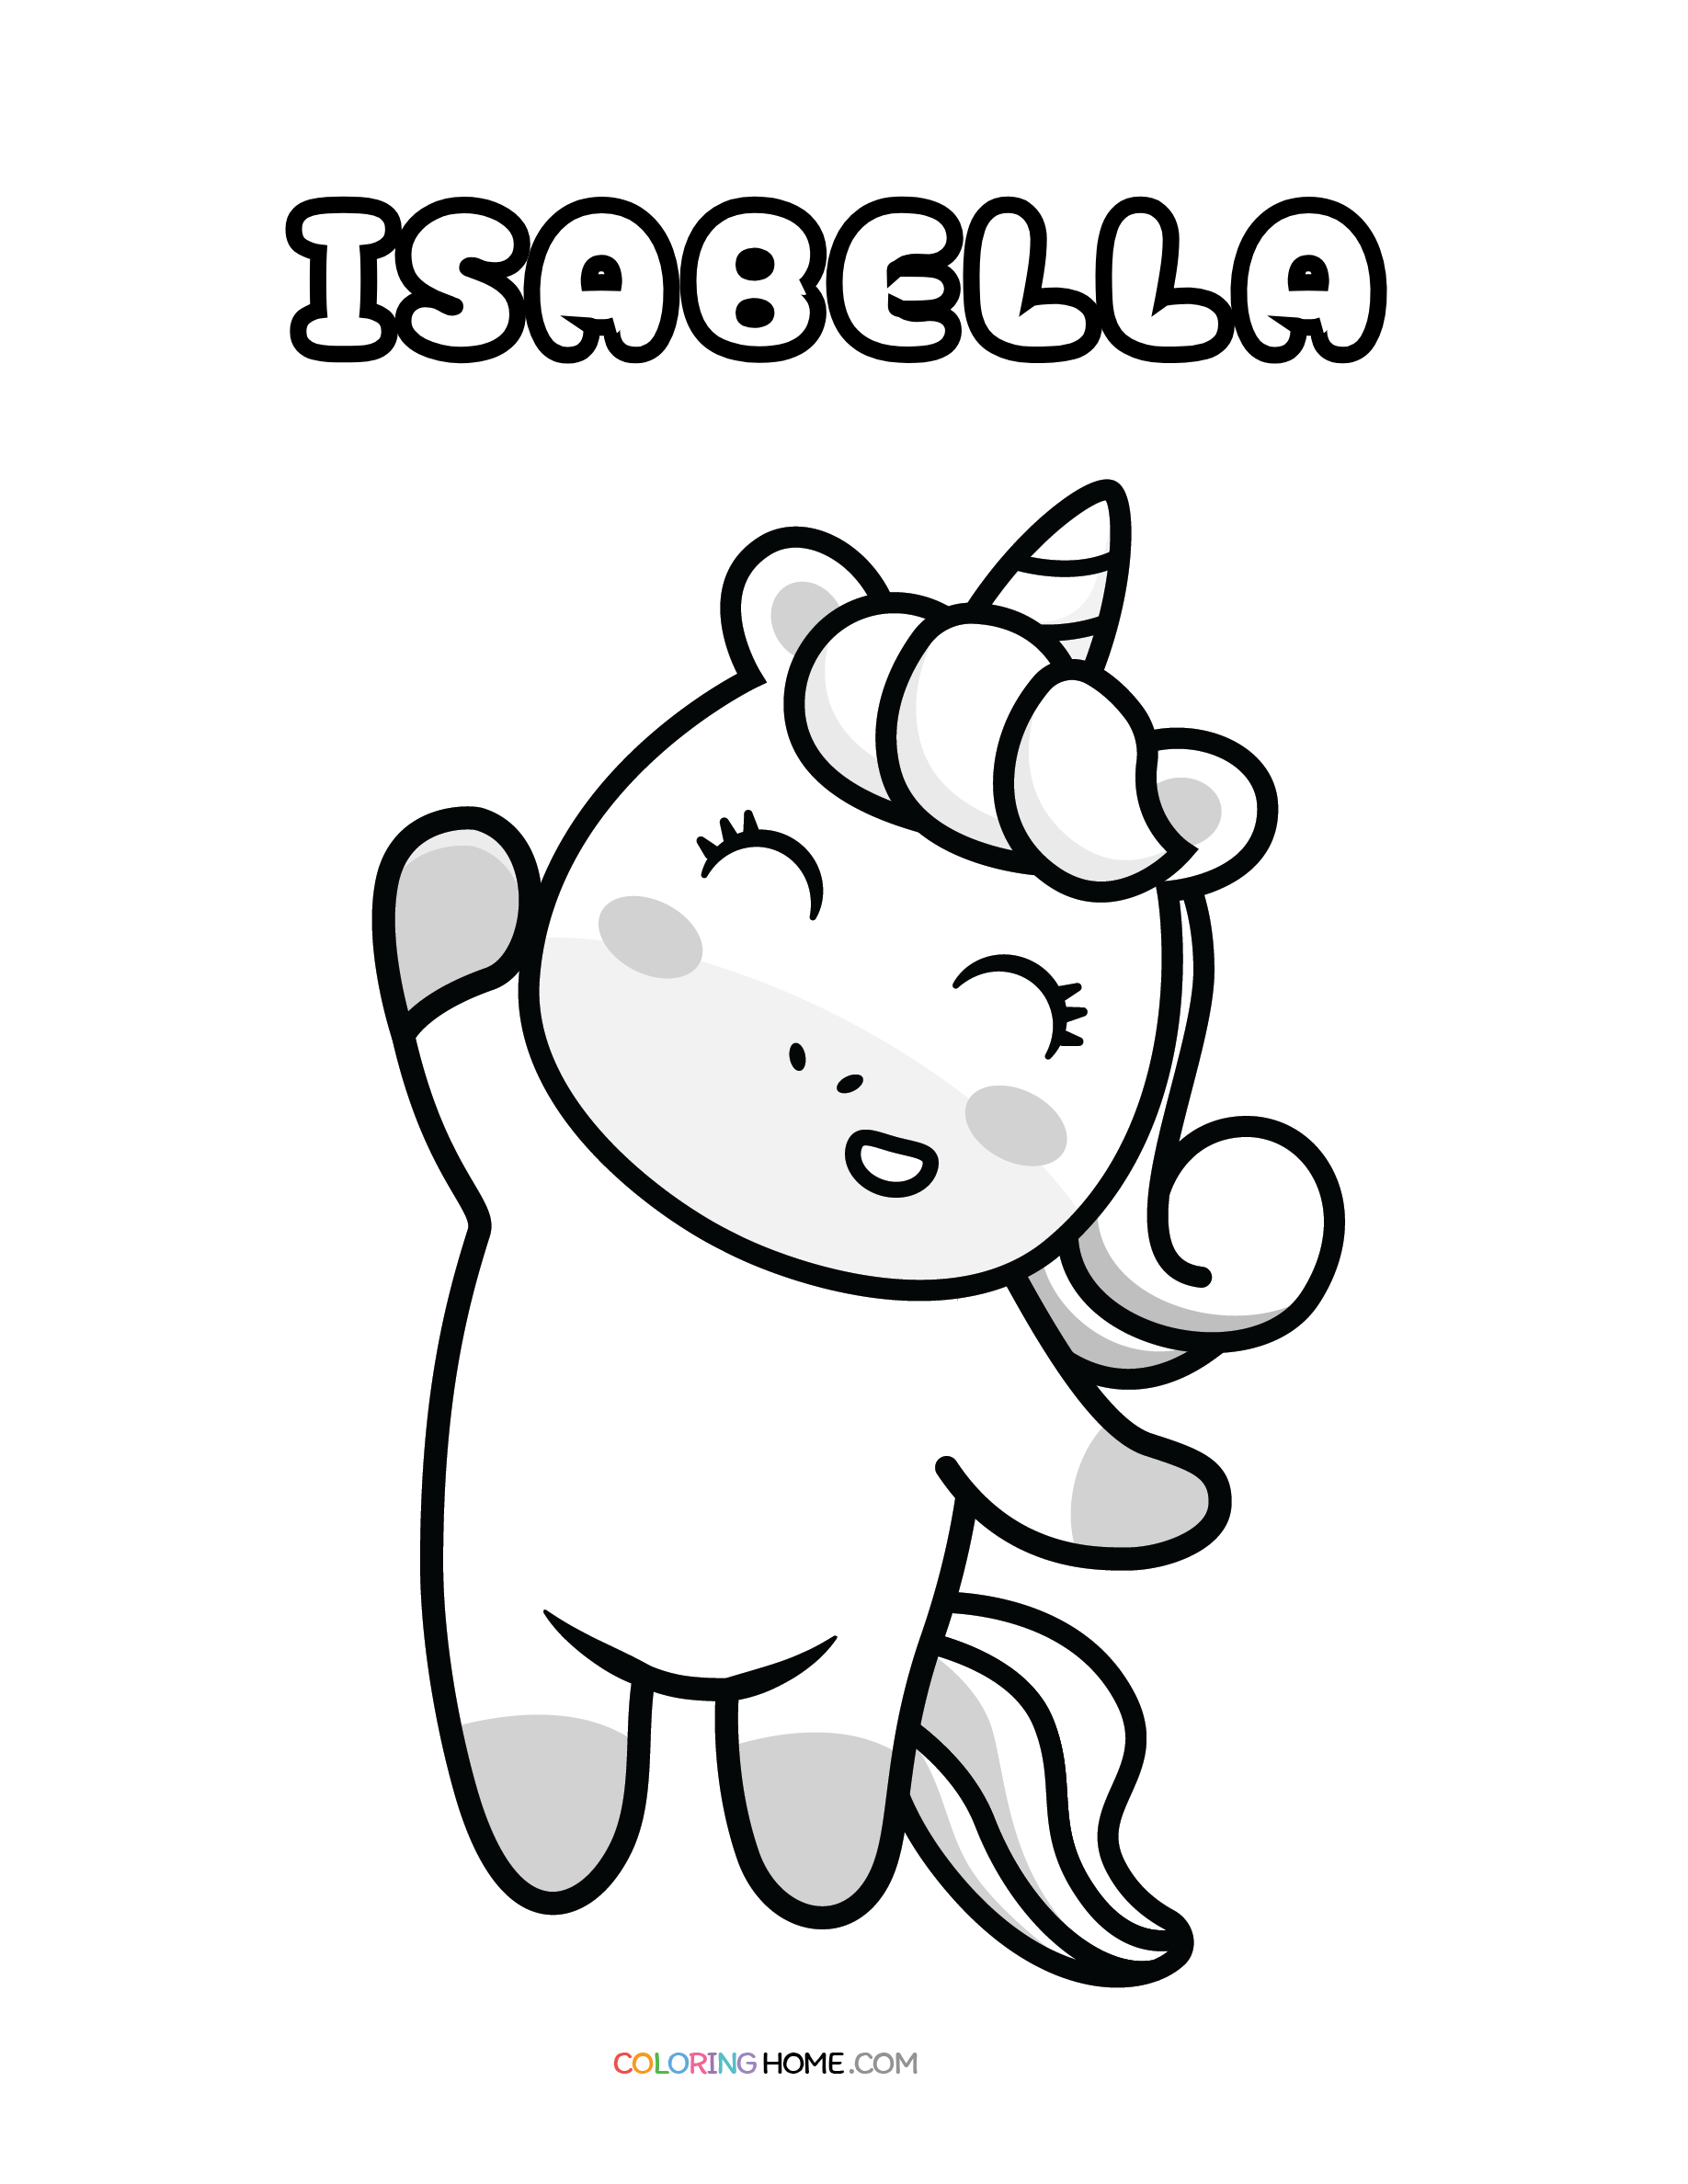 Isabella unicorn coloring page